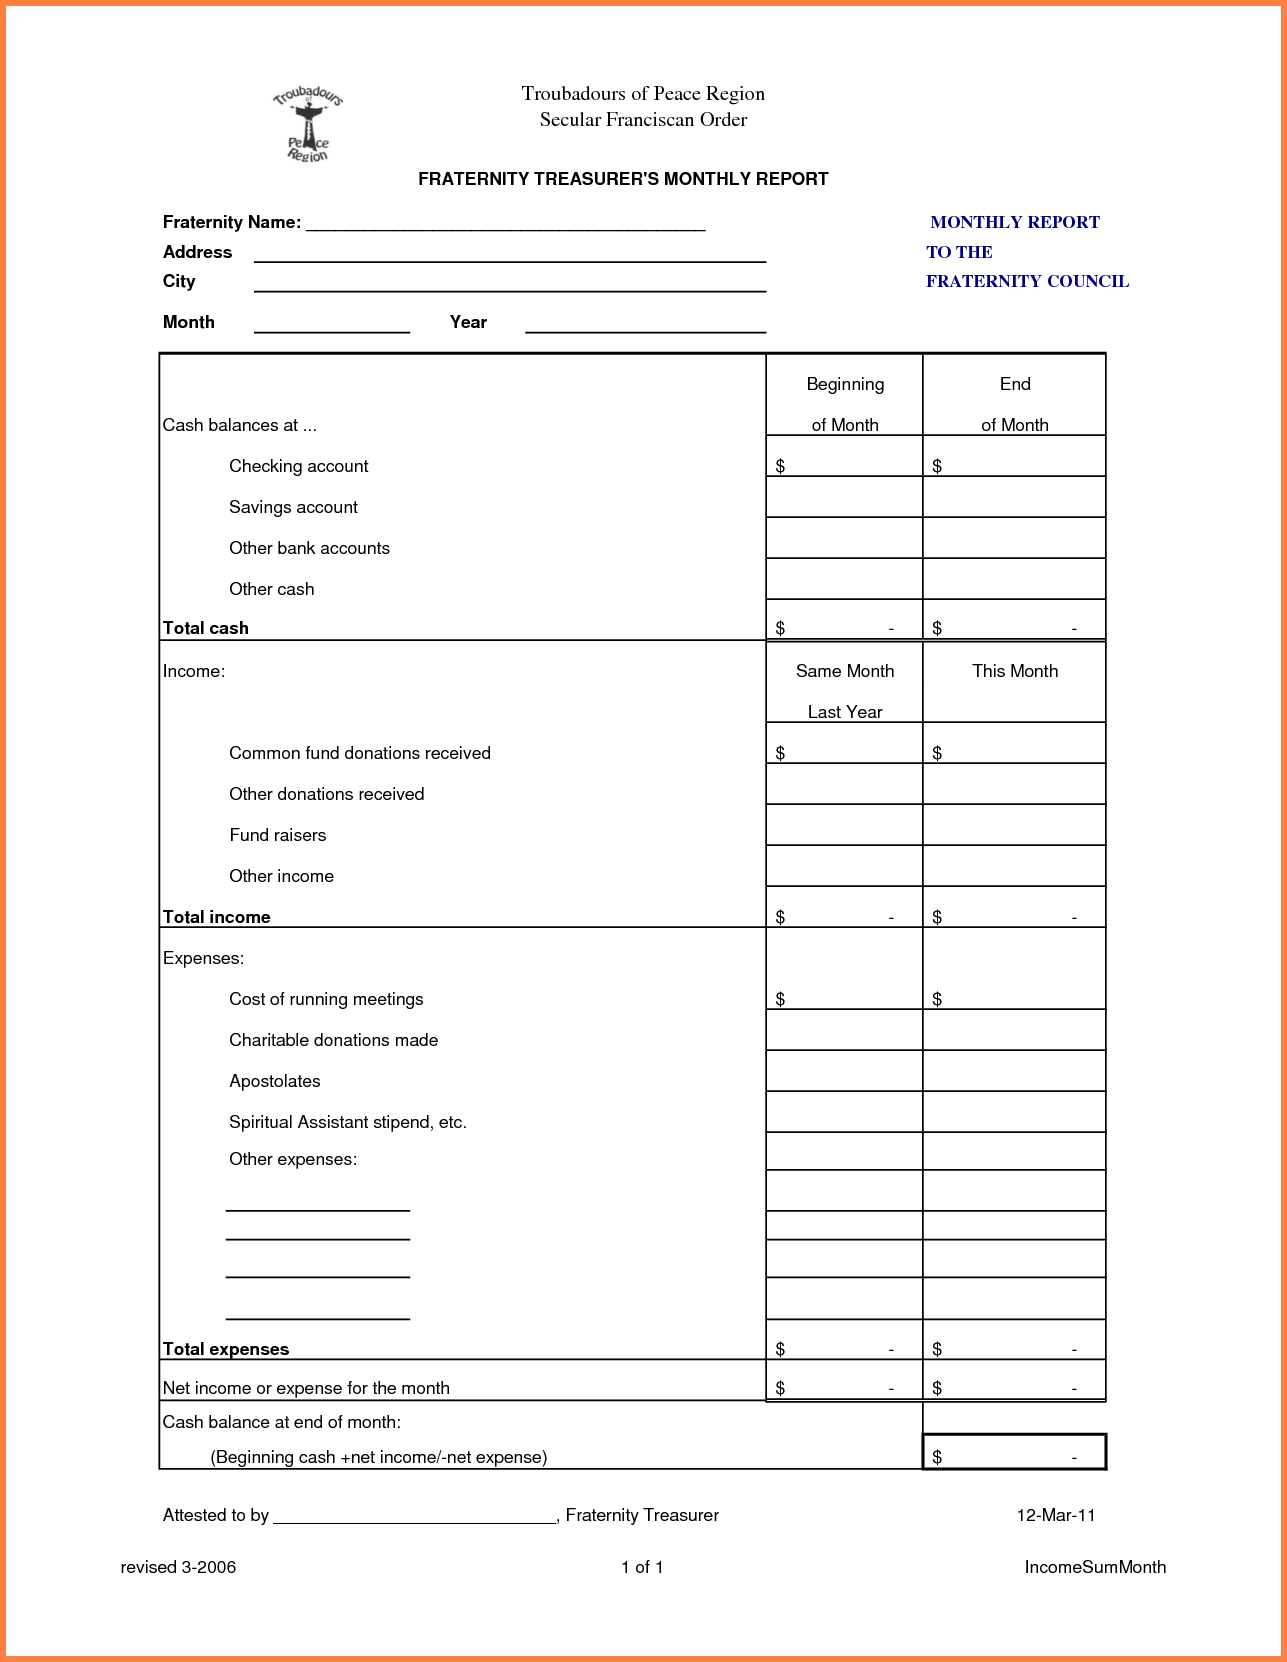 Treasurer's Report Excel Spreadsheet With Regard To Treasurers Report Templateasurer Essential Print S Maggi